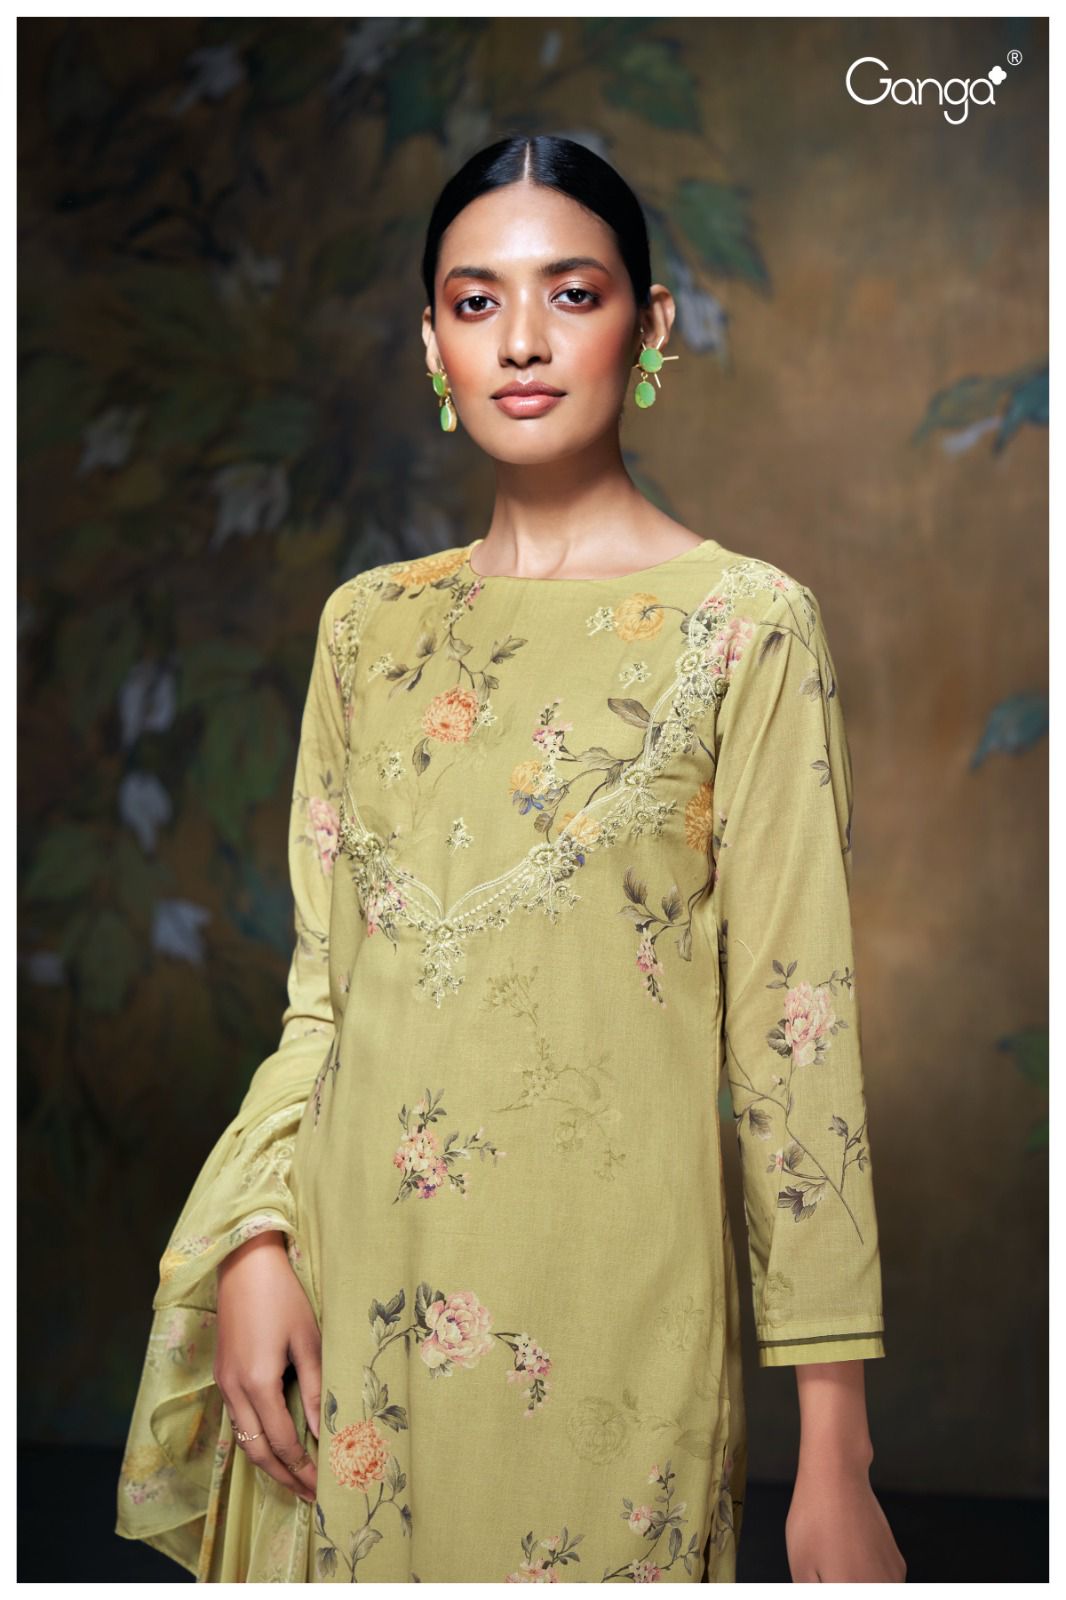 Agamya 2657 Ganga Linen Jacquard Plazzo Style Suits Wholesaler